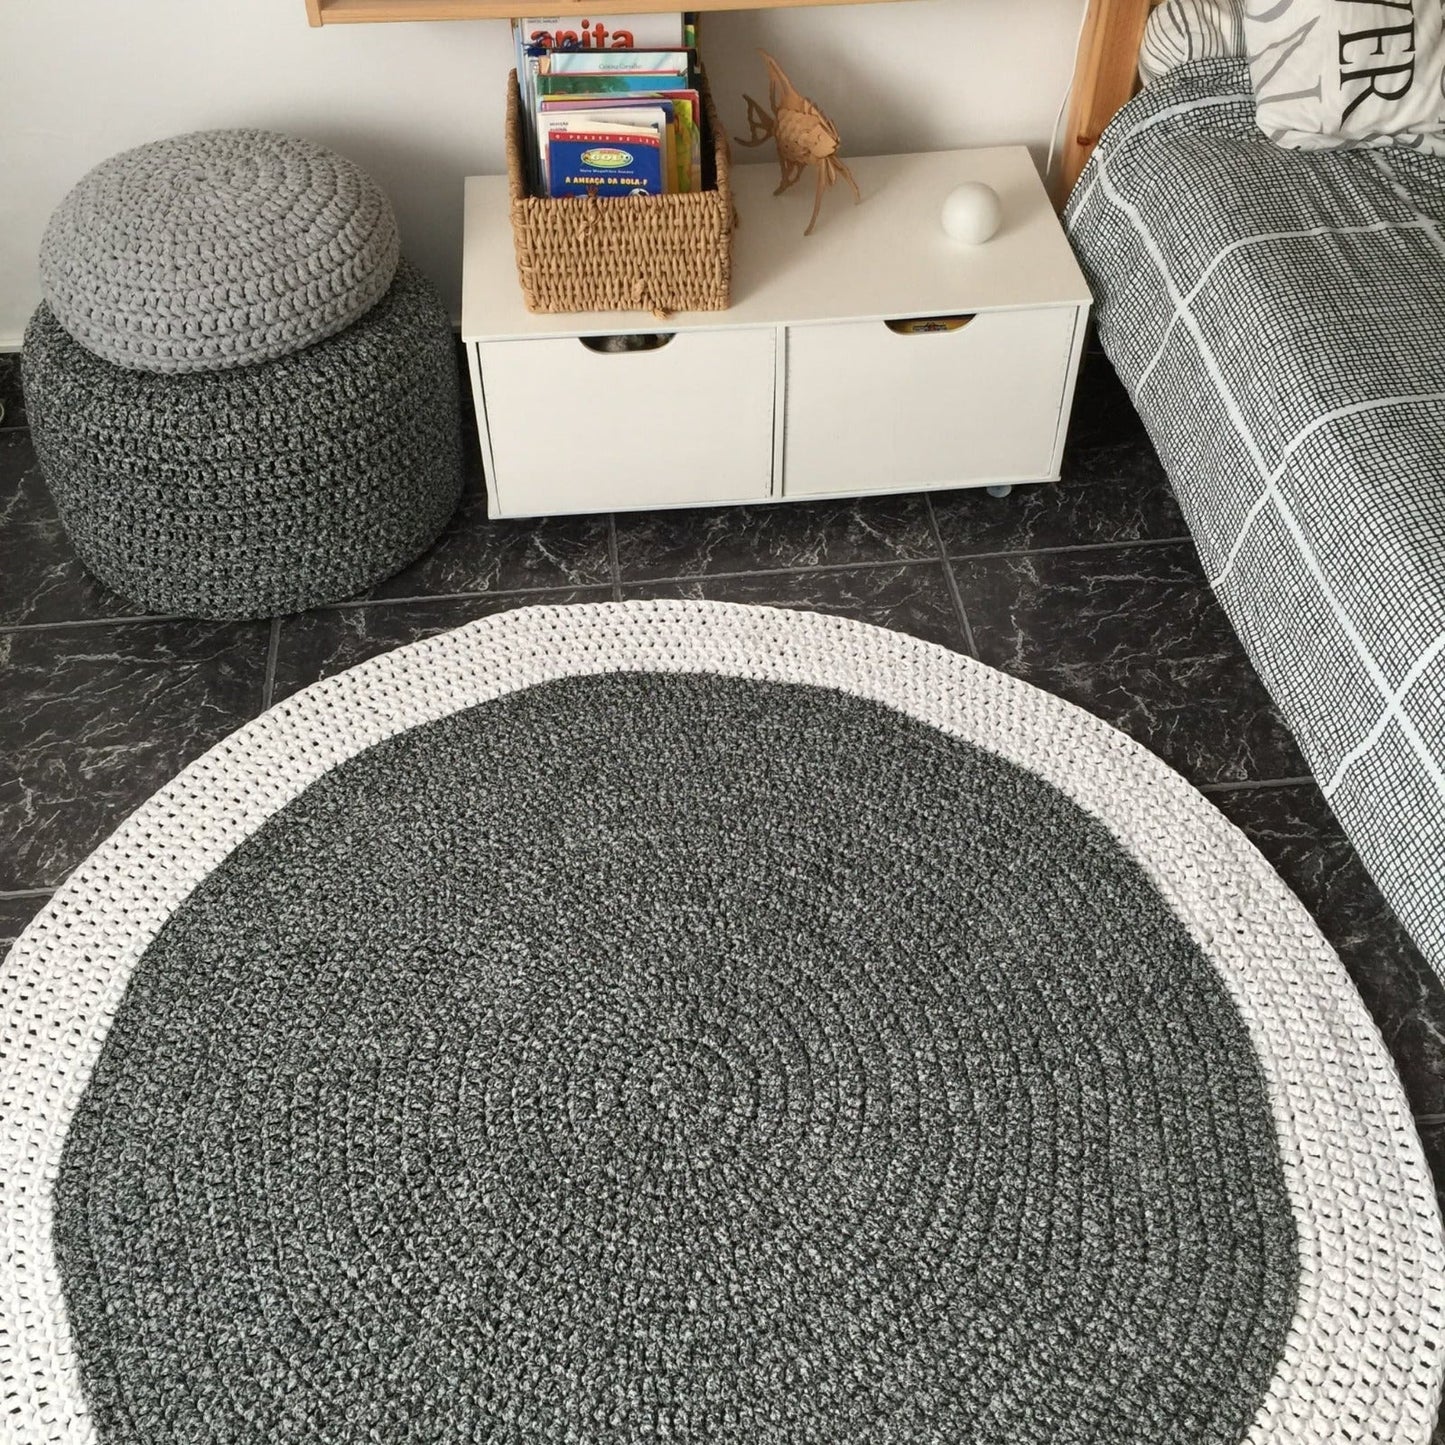 Crochet Round Rug, Soft Floor Mat - Looping Home